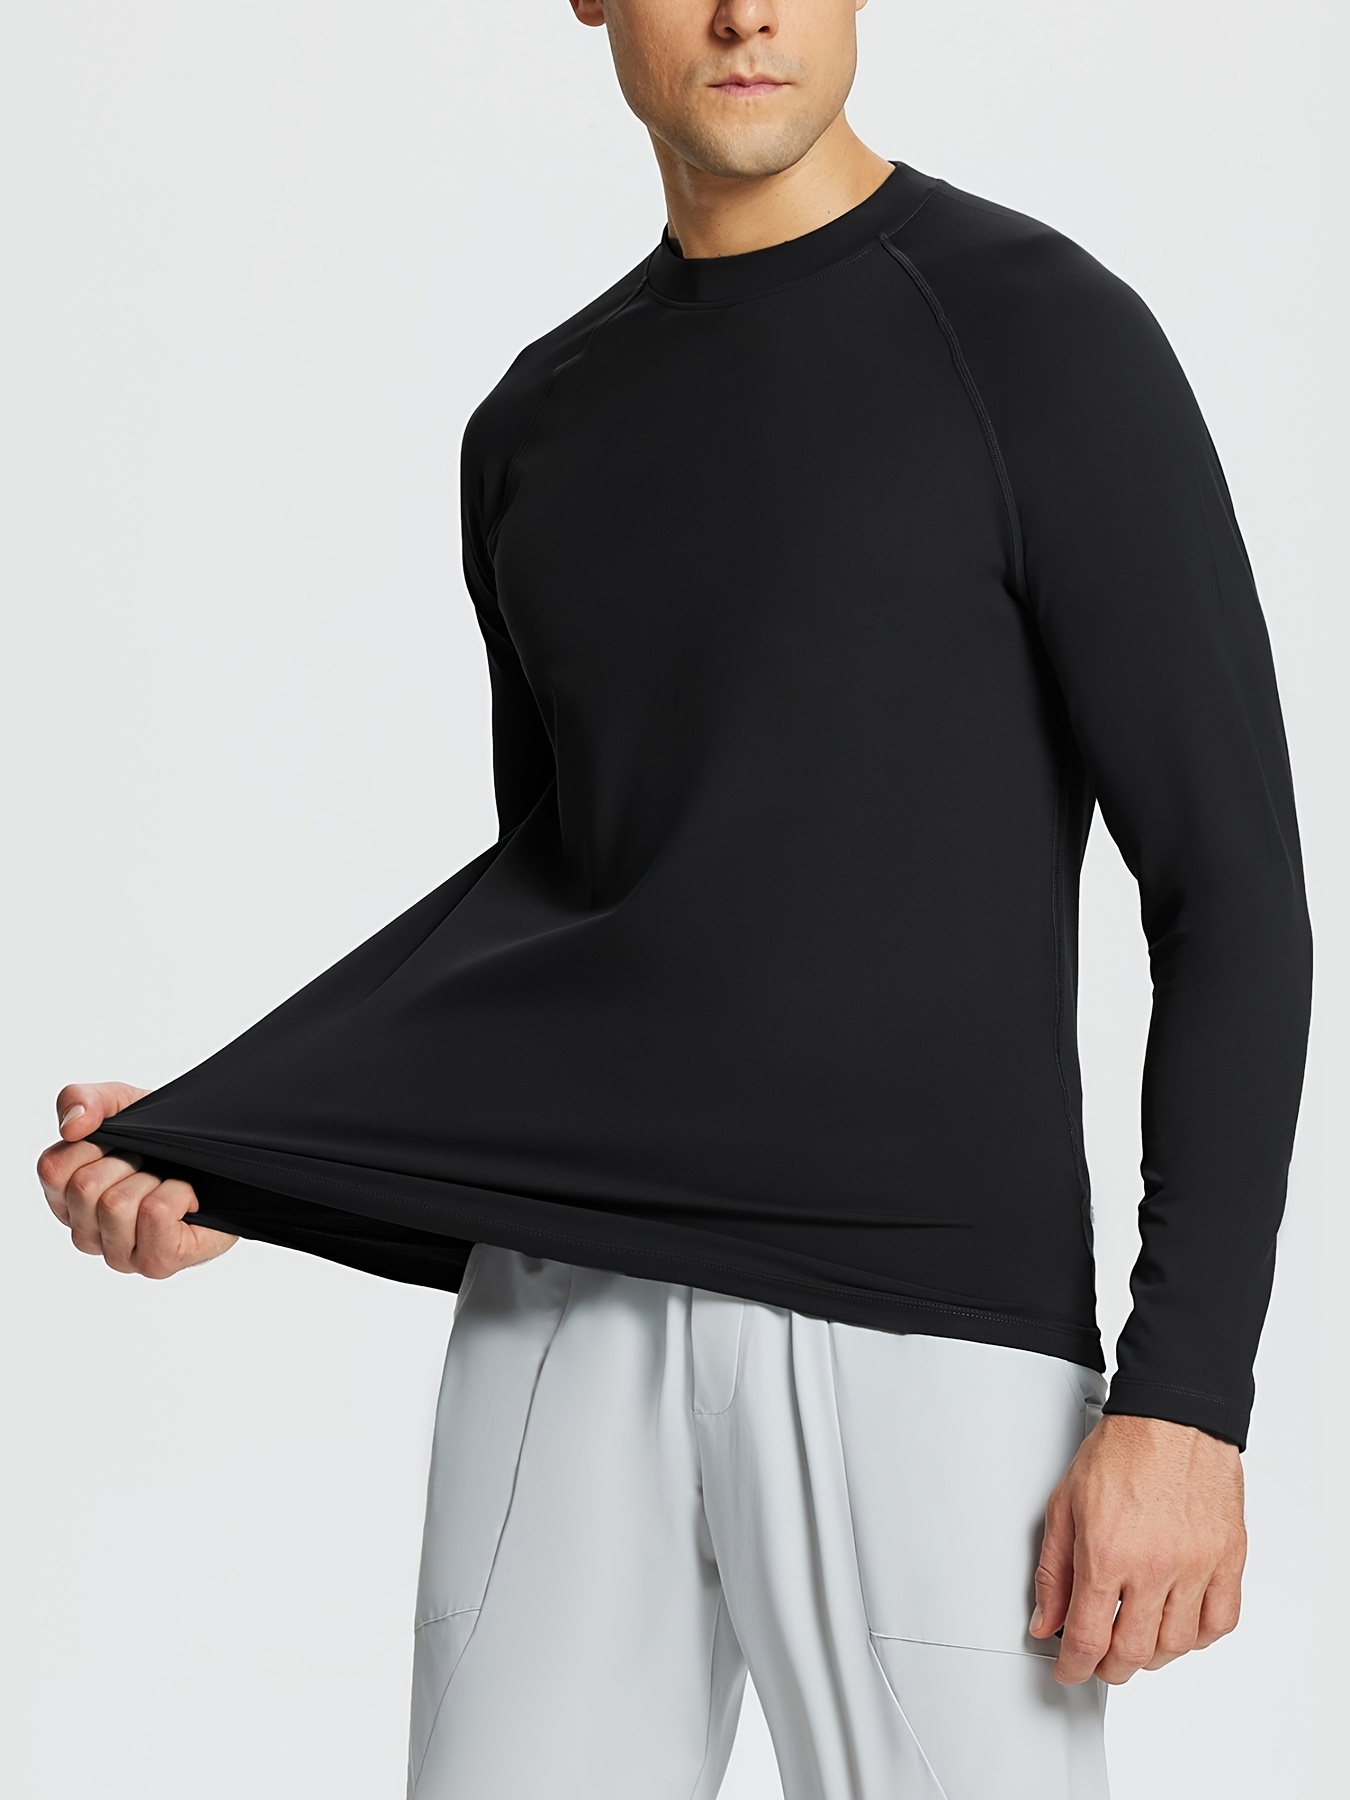 Stay Warm & Dry: * Men's Long Sleeve Thermal Fleece Shirt for Running &  Fitness Training